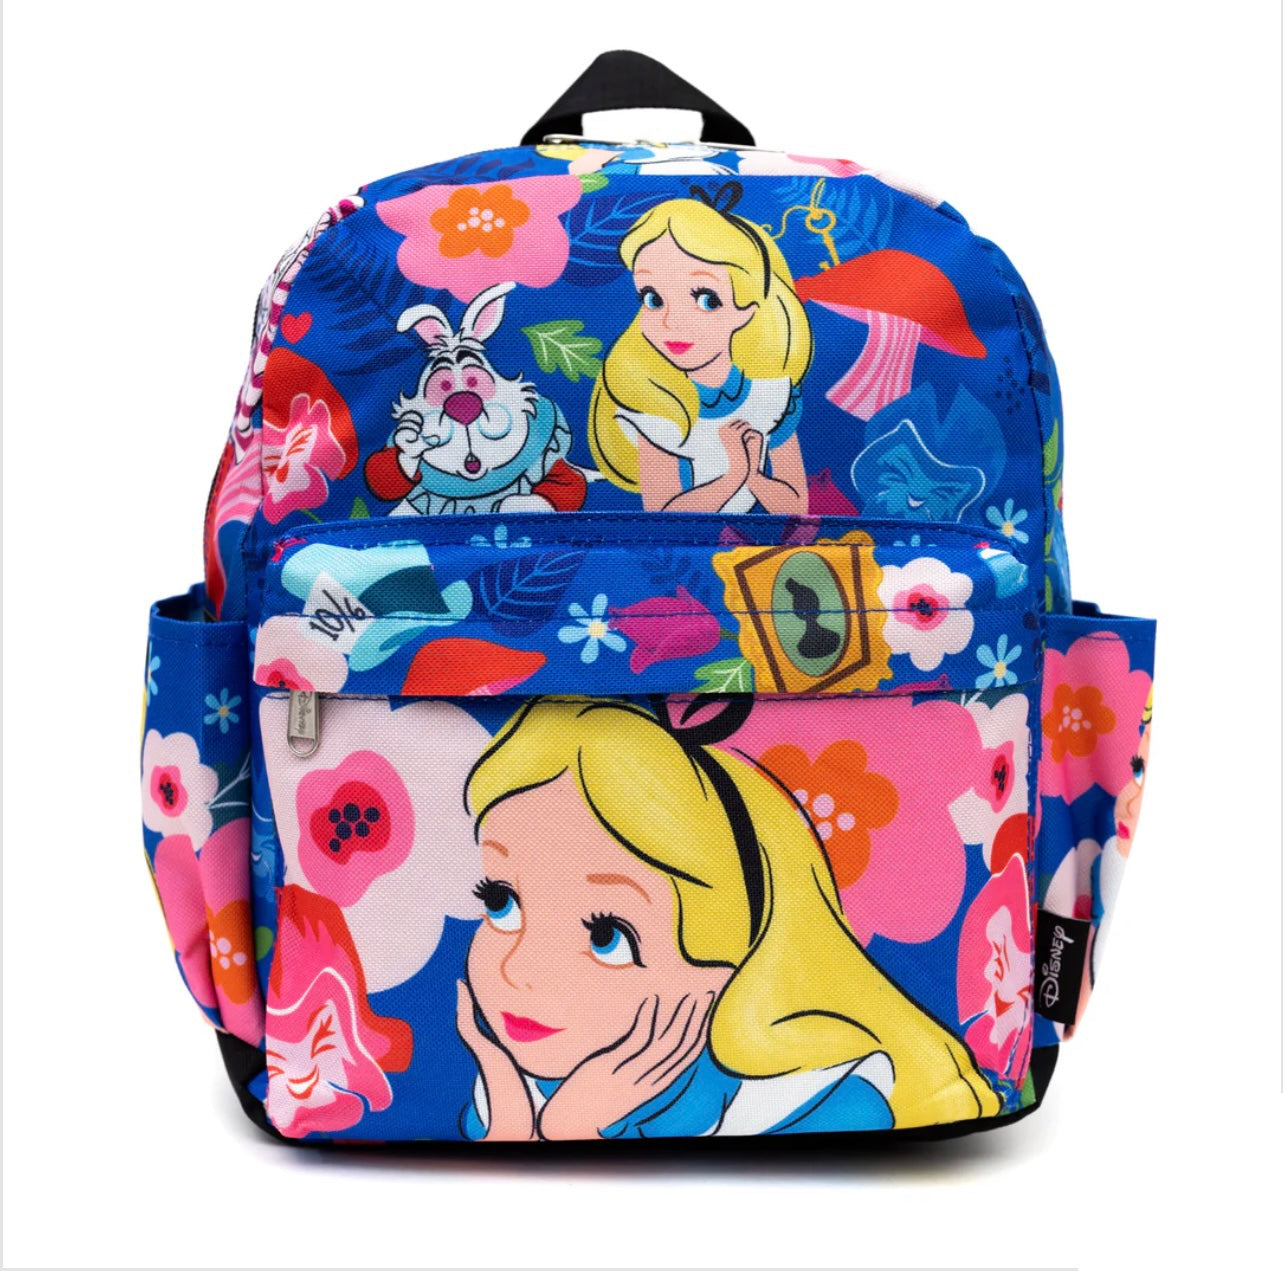 Alice in Wonderland Fabric Backpack